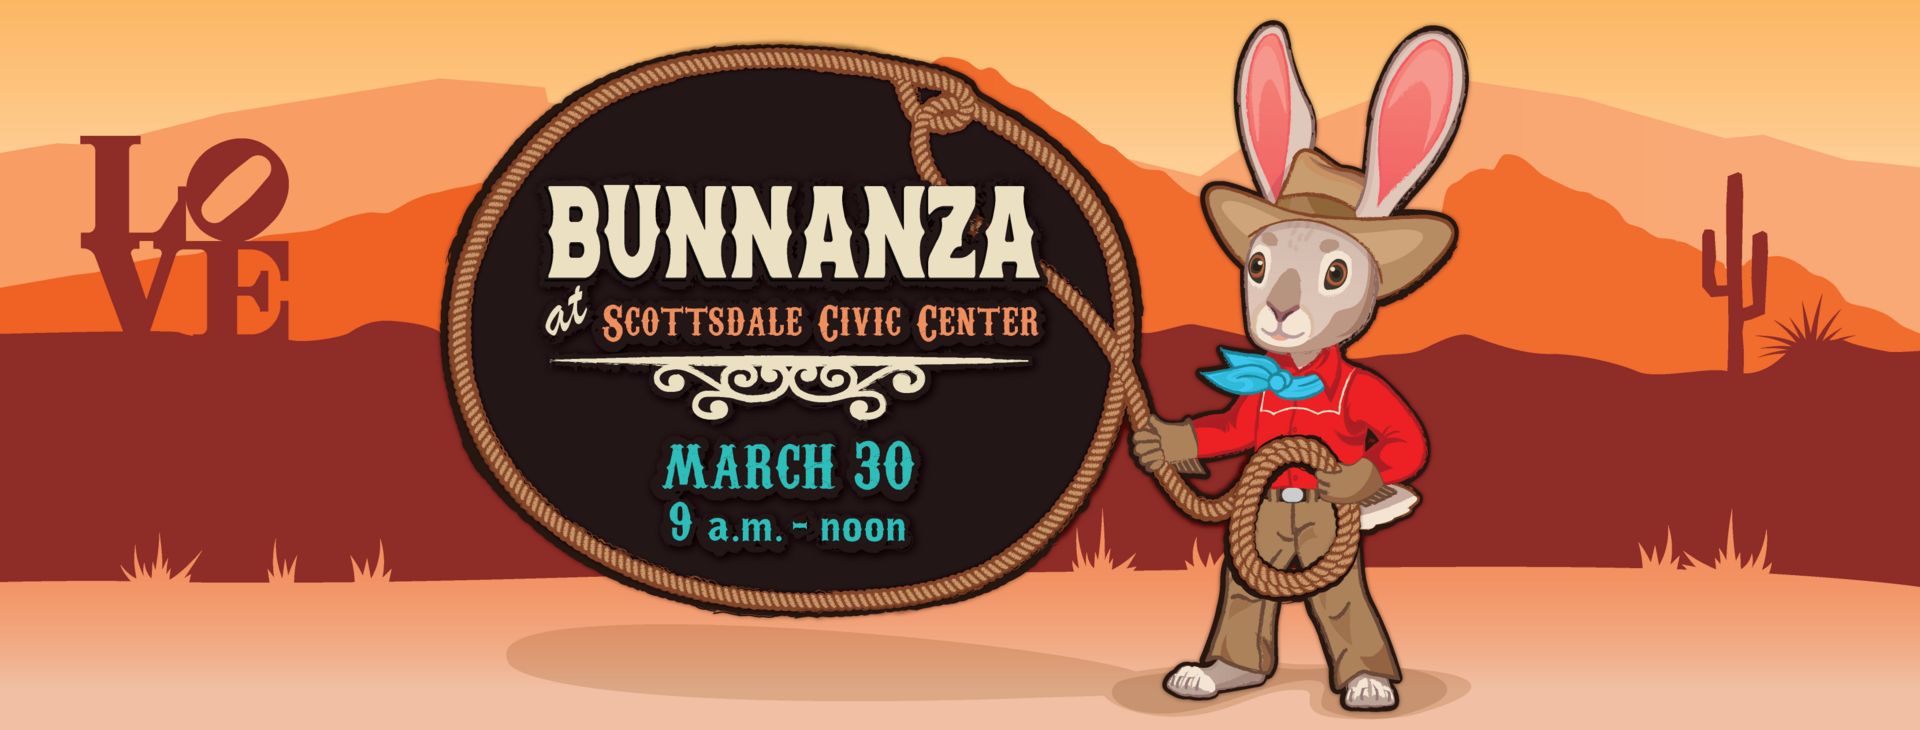 Bunnanza at Scottsdale Civic Center, Scottsdale, Arizona, United States